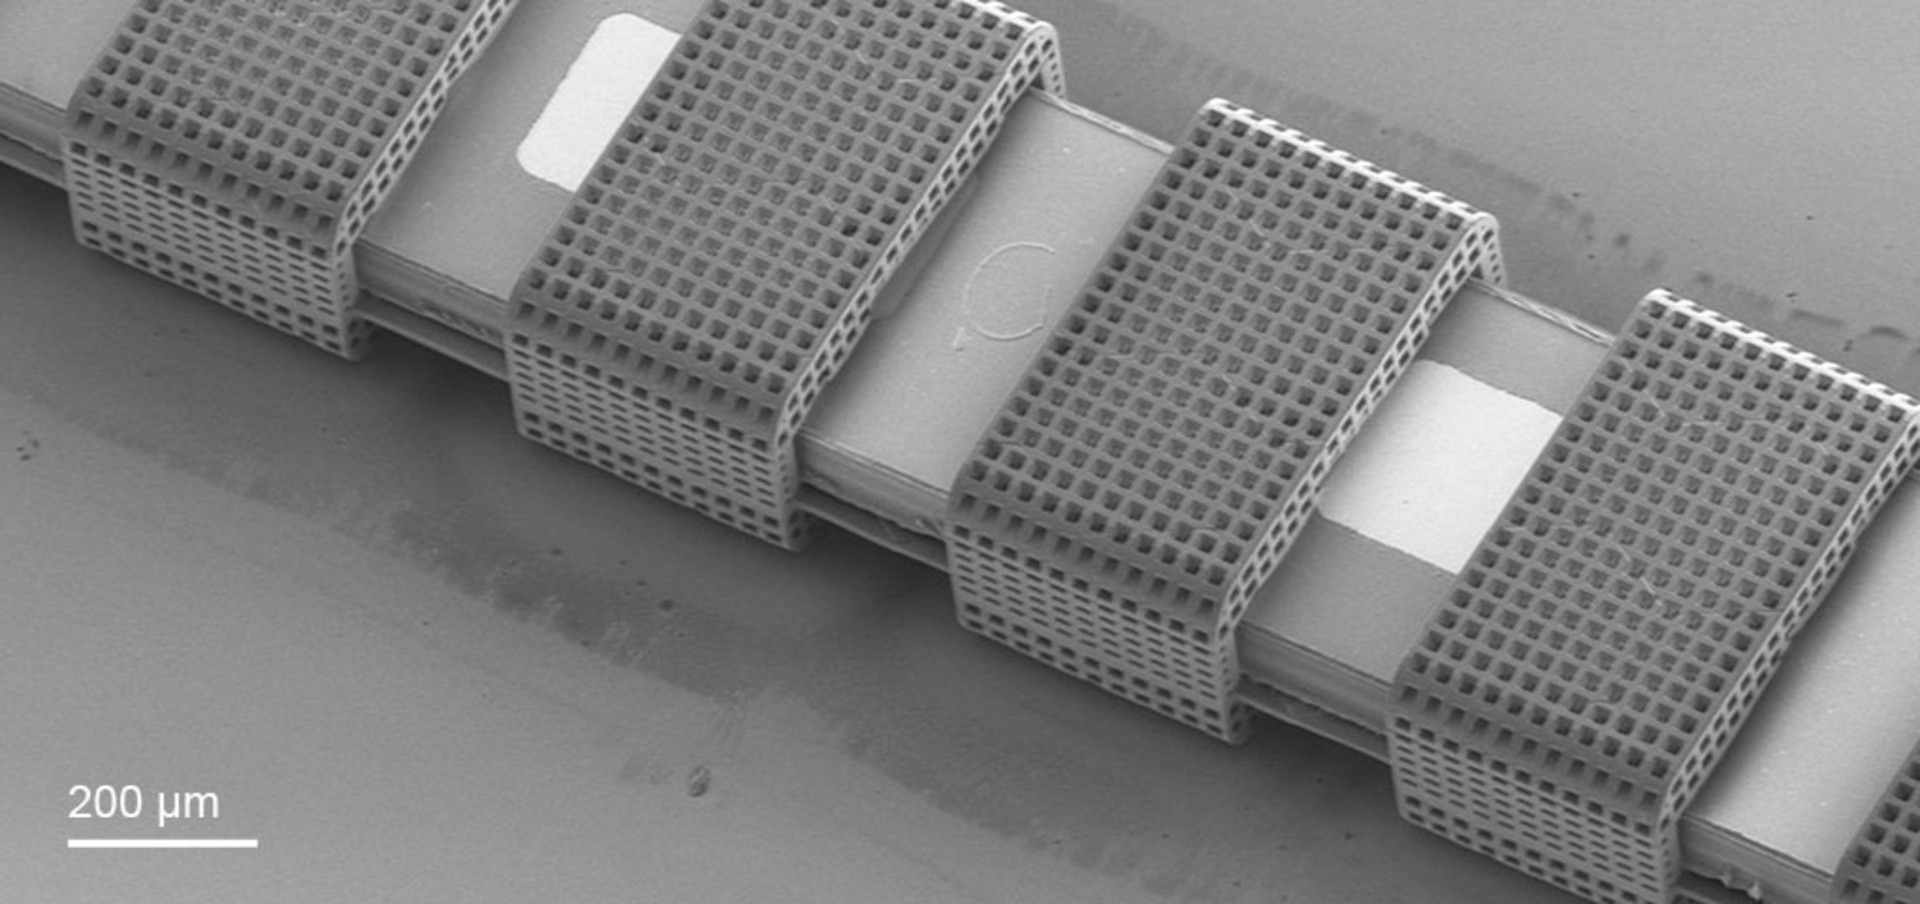 3D-gedruckte Mikrostrukturen auf einem flexiblen MEMS-Elektrodenarray.